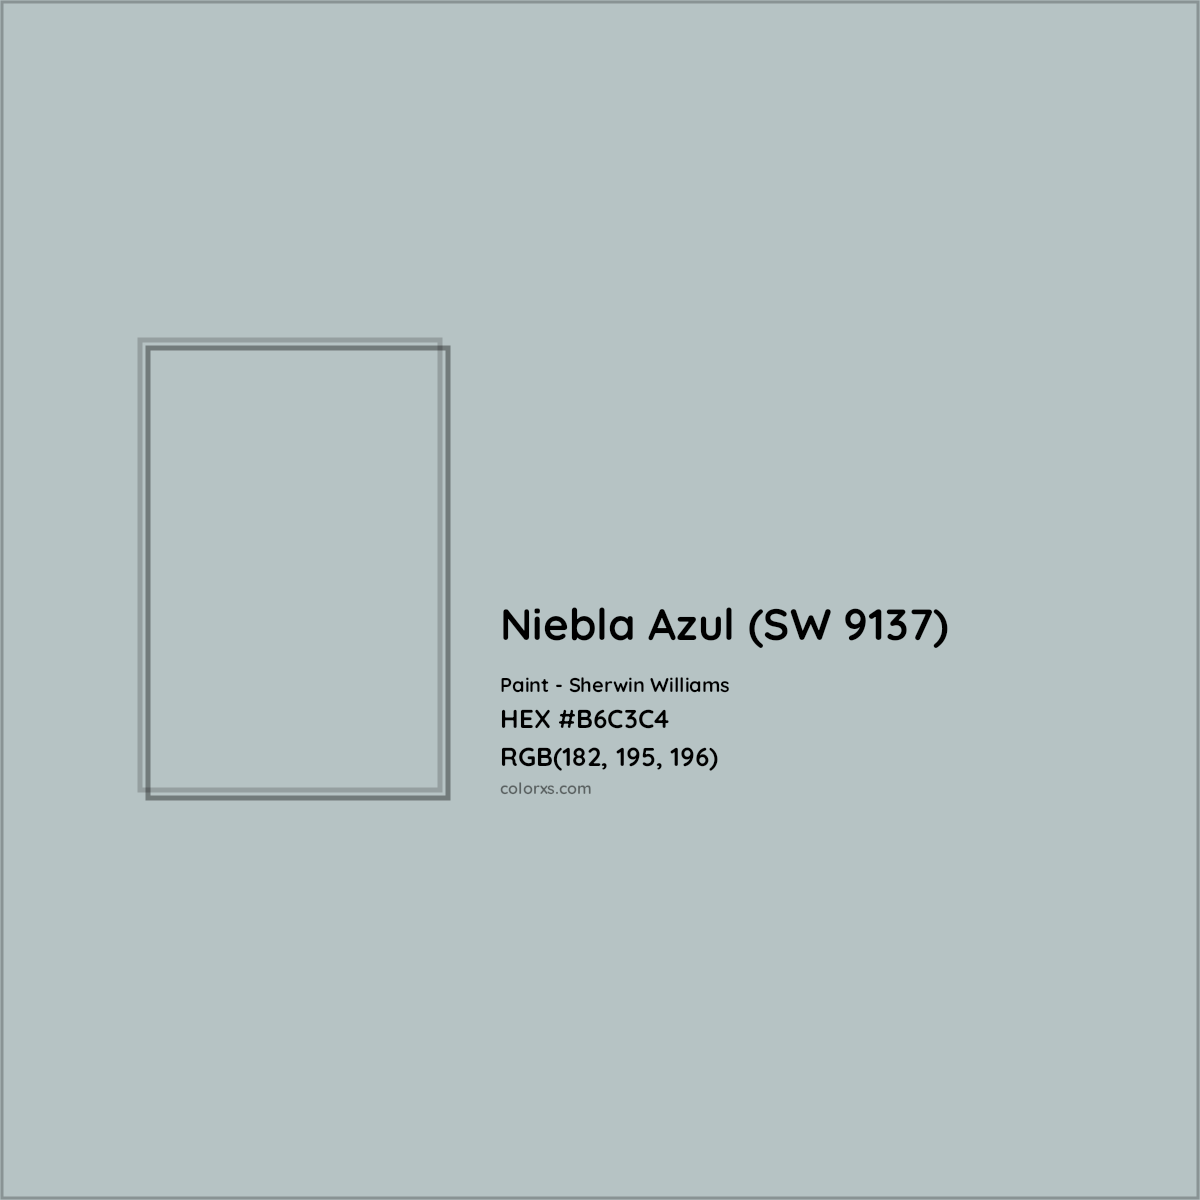 HEX #B6C3C4 Niebla Azul (SW 9137) Paint Sherwin Williams - Color Code